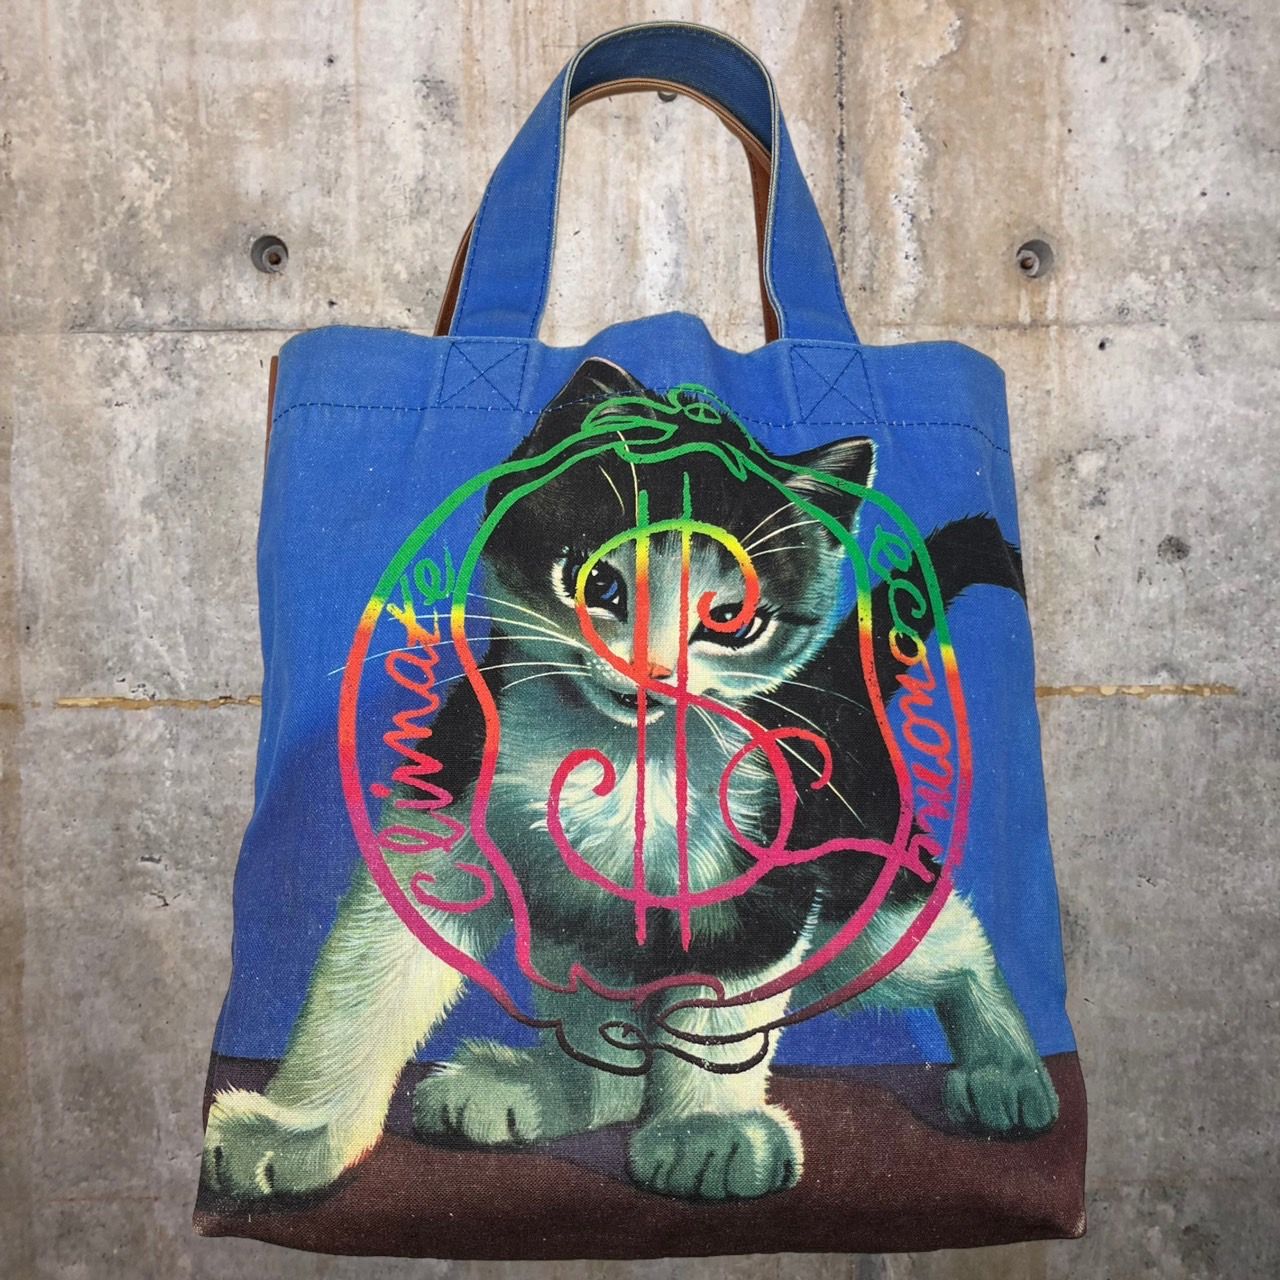 Vivienne Westwood(ヴィヴィアンウエストウッド) Kitten tote bag 